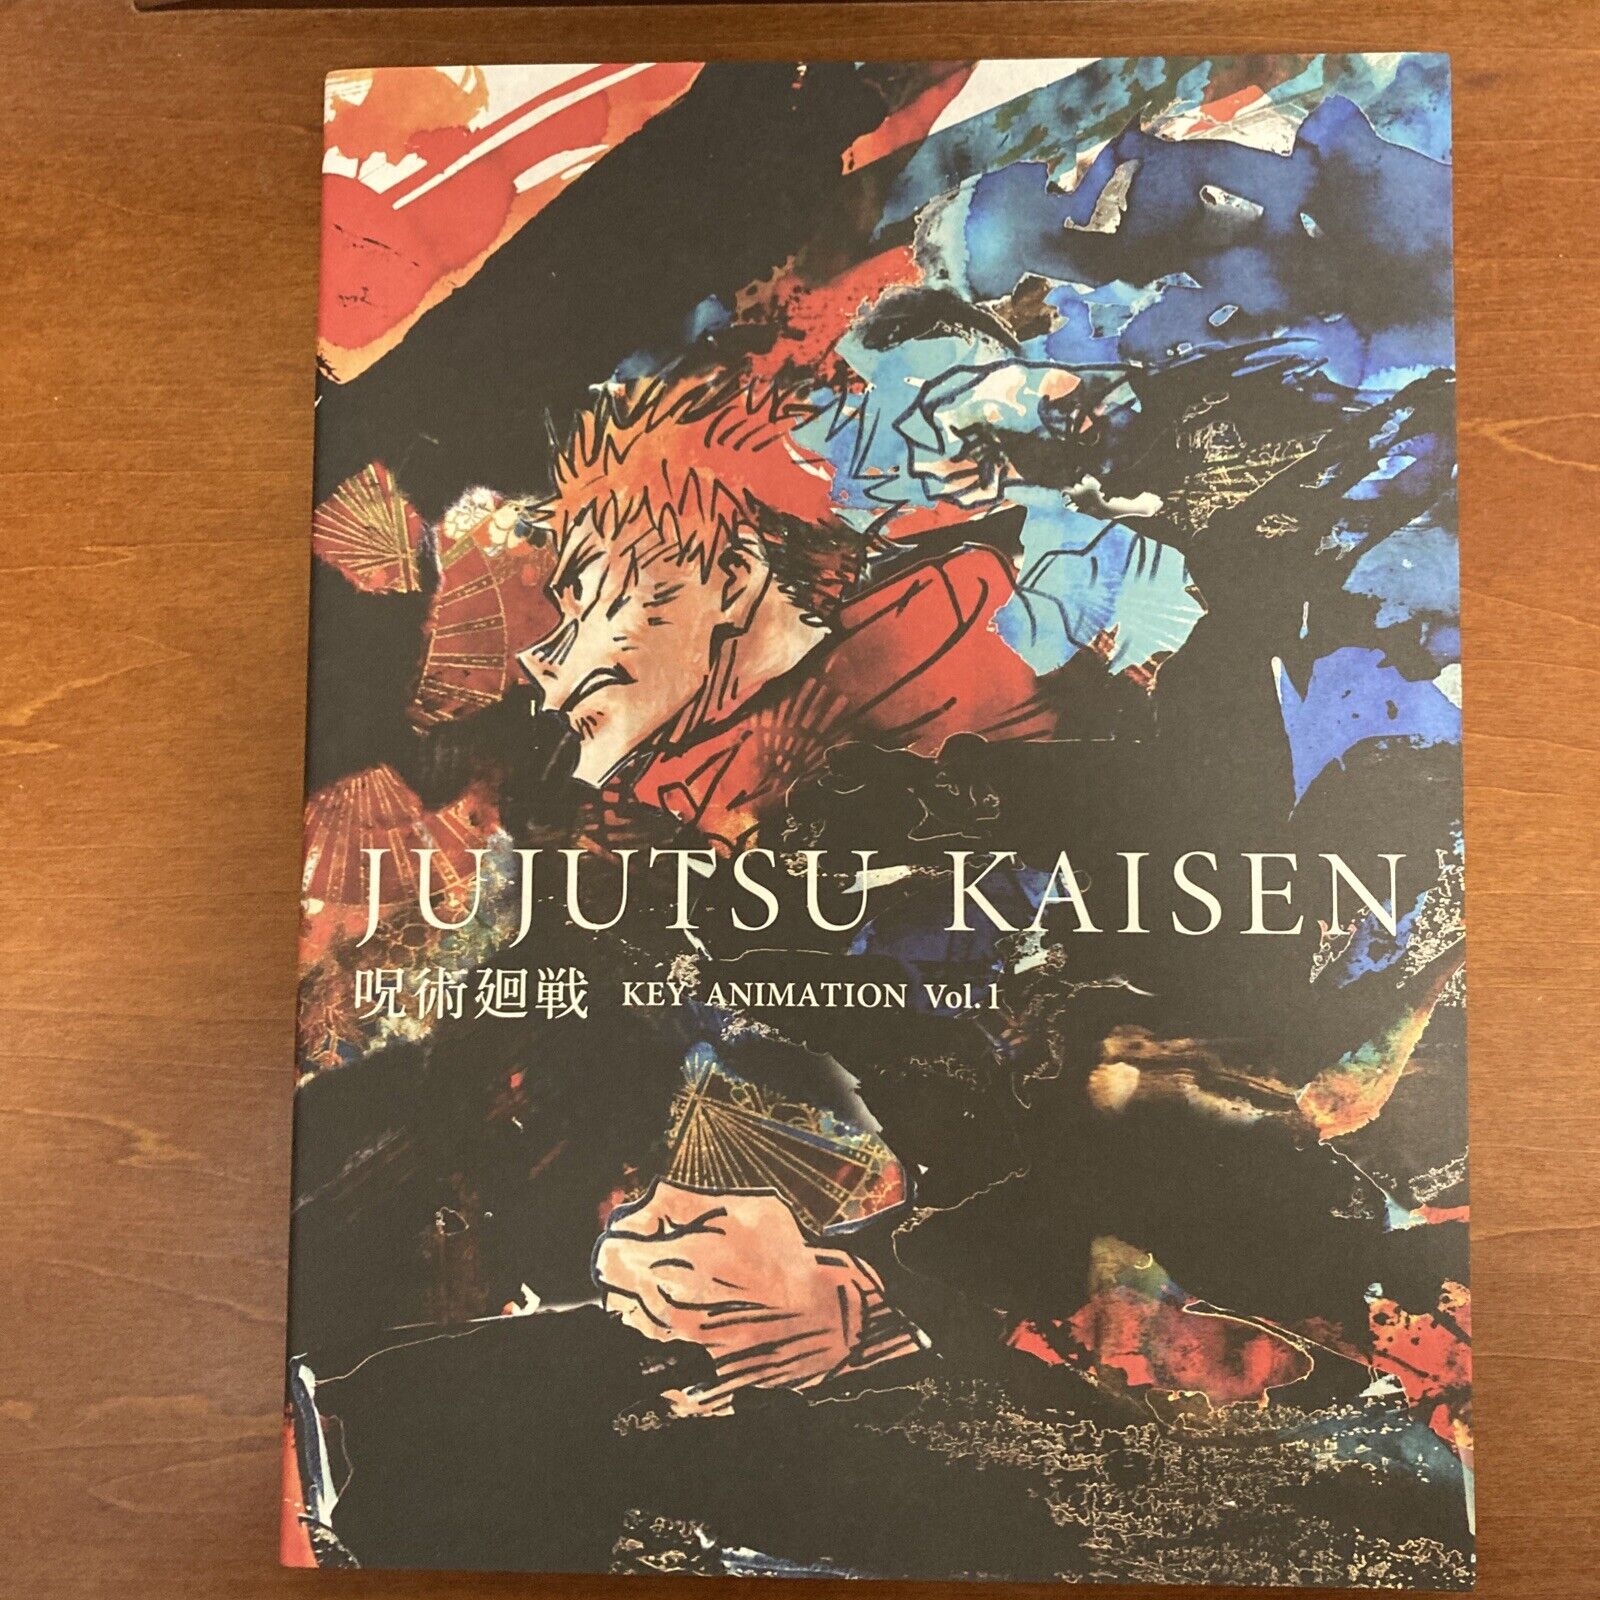 Jujutsu Kaisen KEY ANIMATION Vol.1 Art Book Illustration